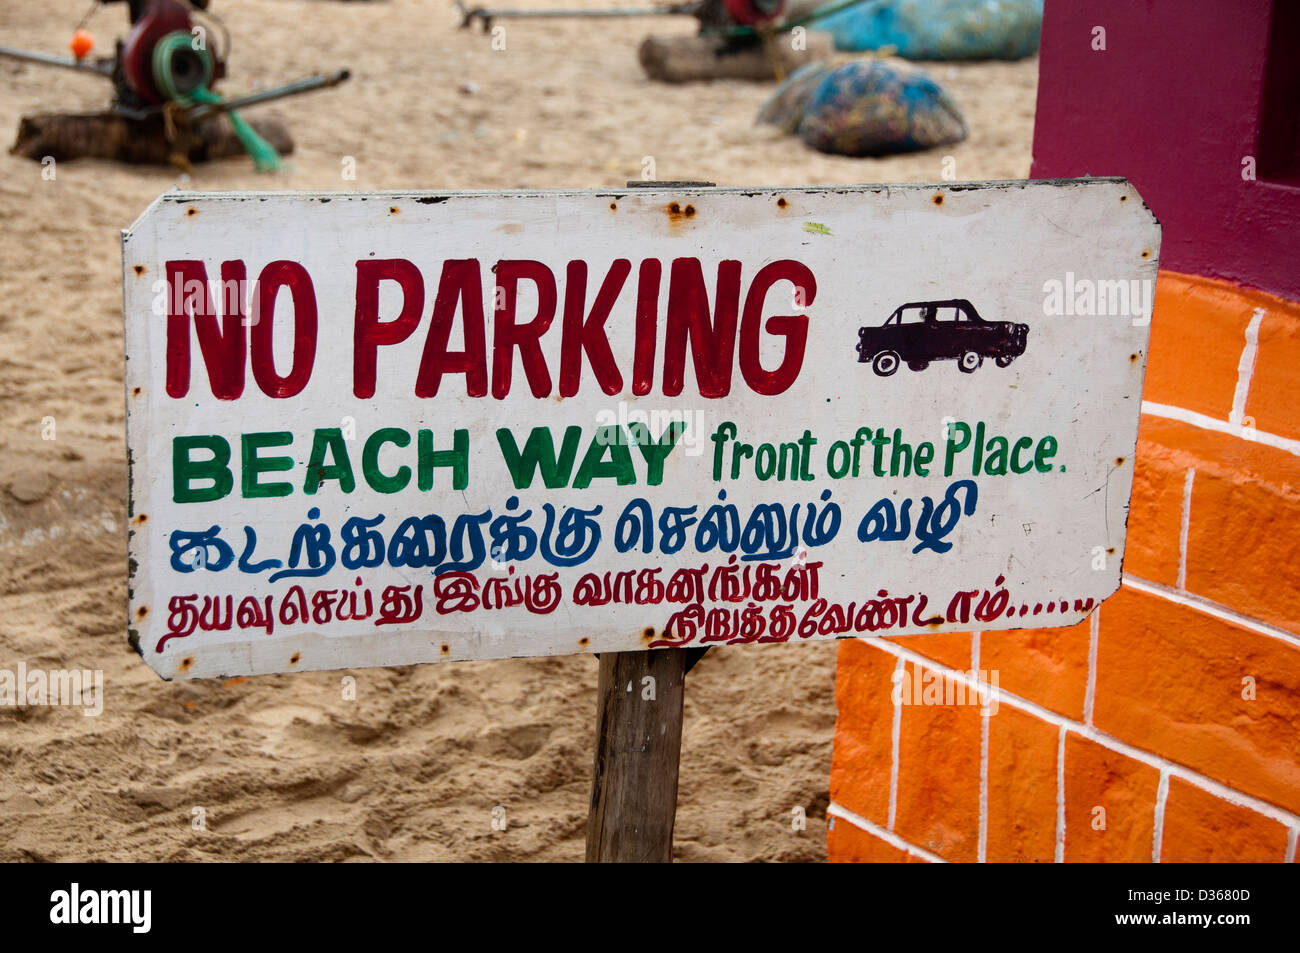 No Parking beach way Sign Covelong  ( Kovalam or Cobelon ) India Tamil Nadu Stock Photo